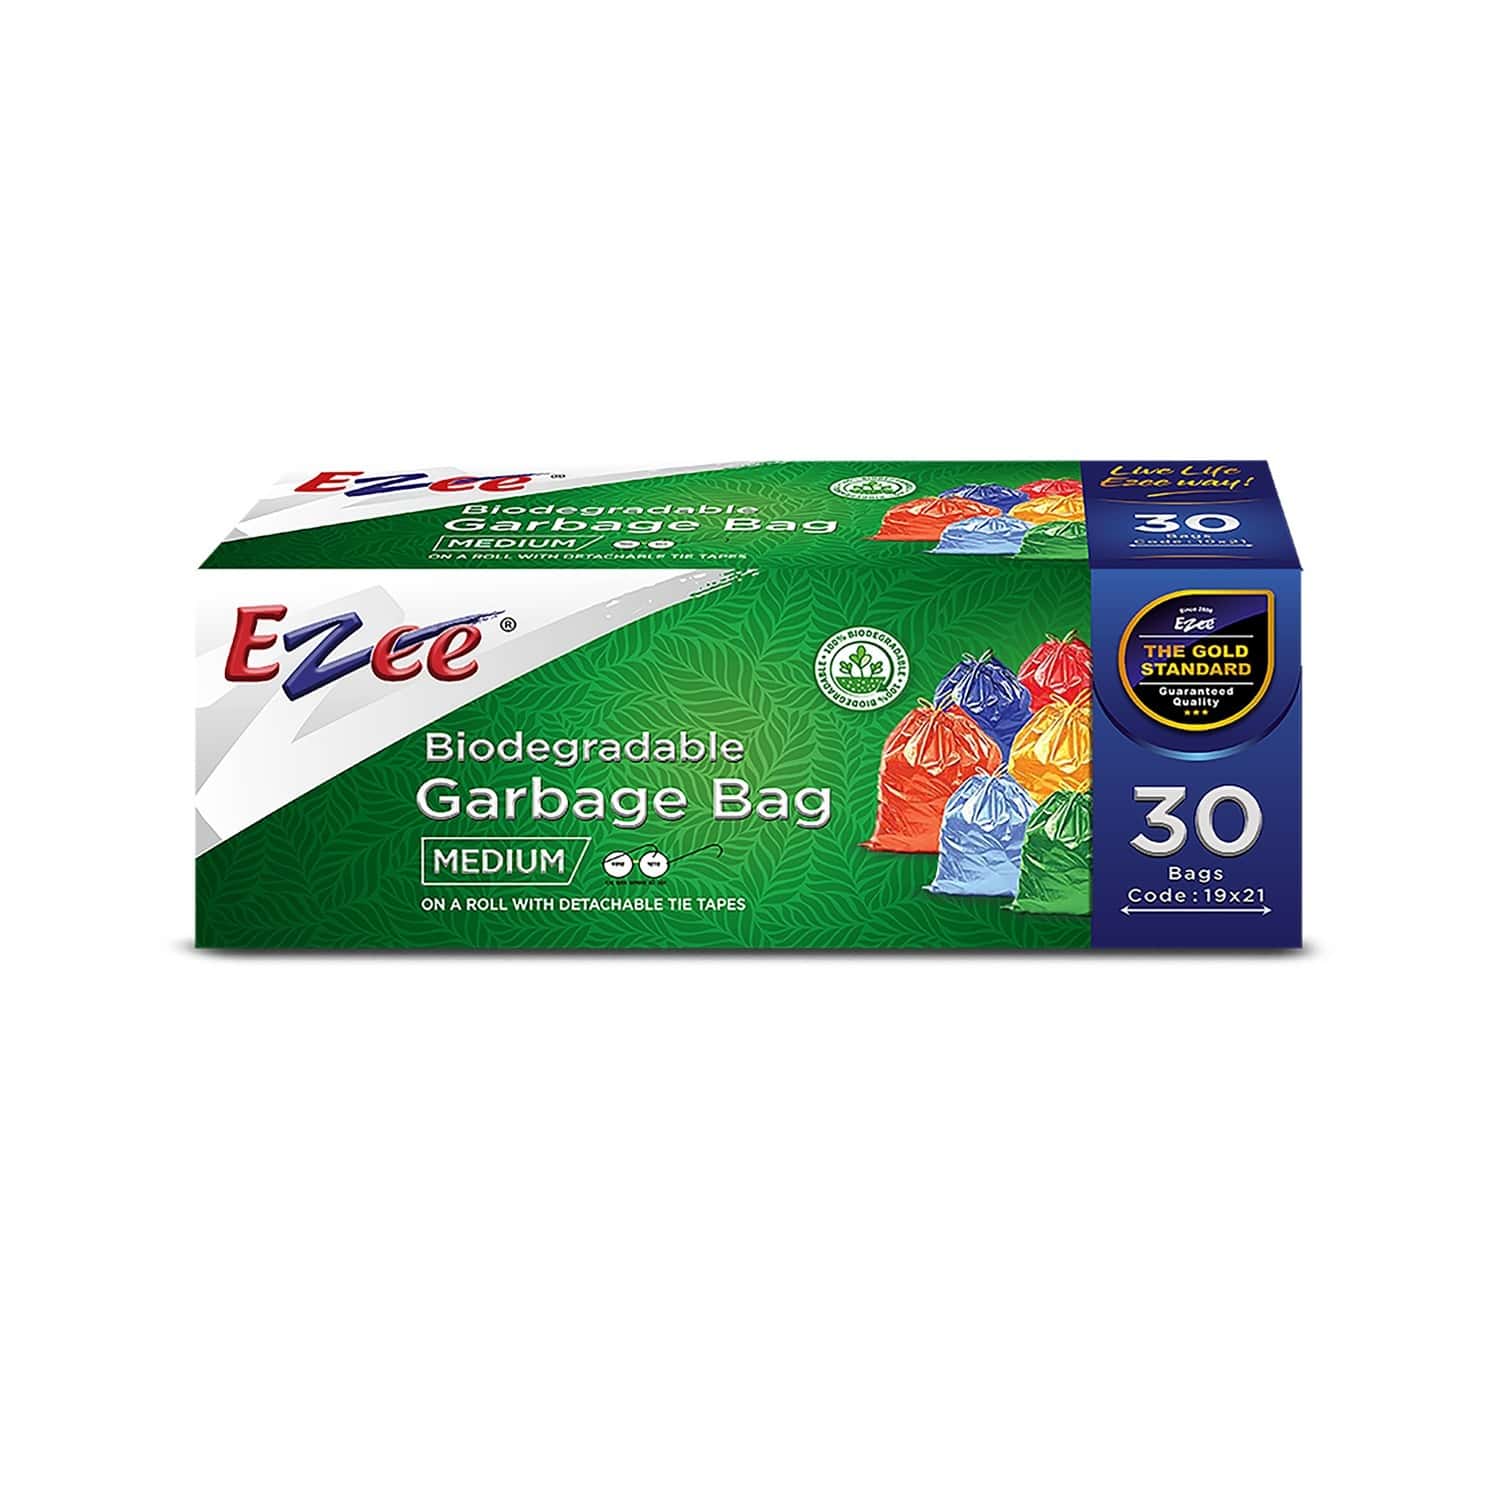 Ezee Garbage Bags/Dustbin Bags/Trash Bags - Medium - 19x21 inches 